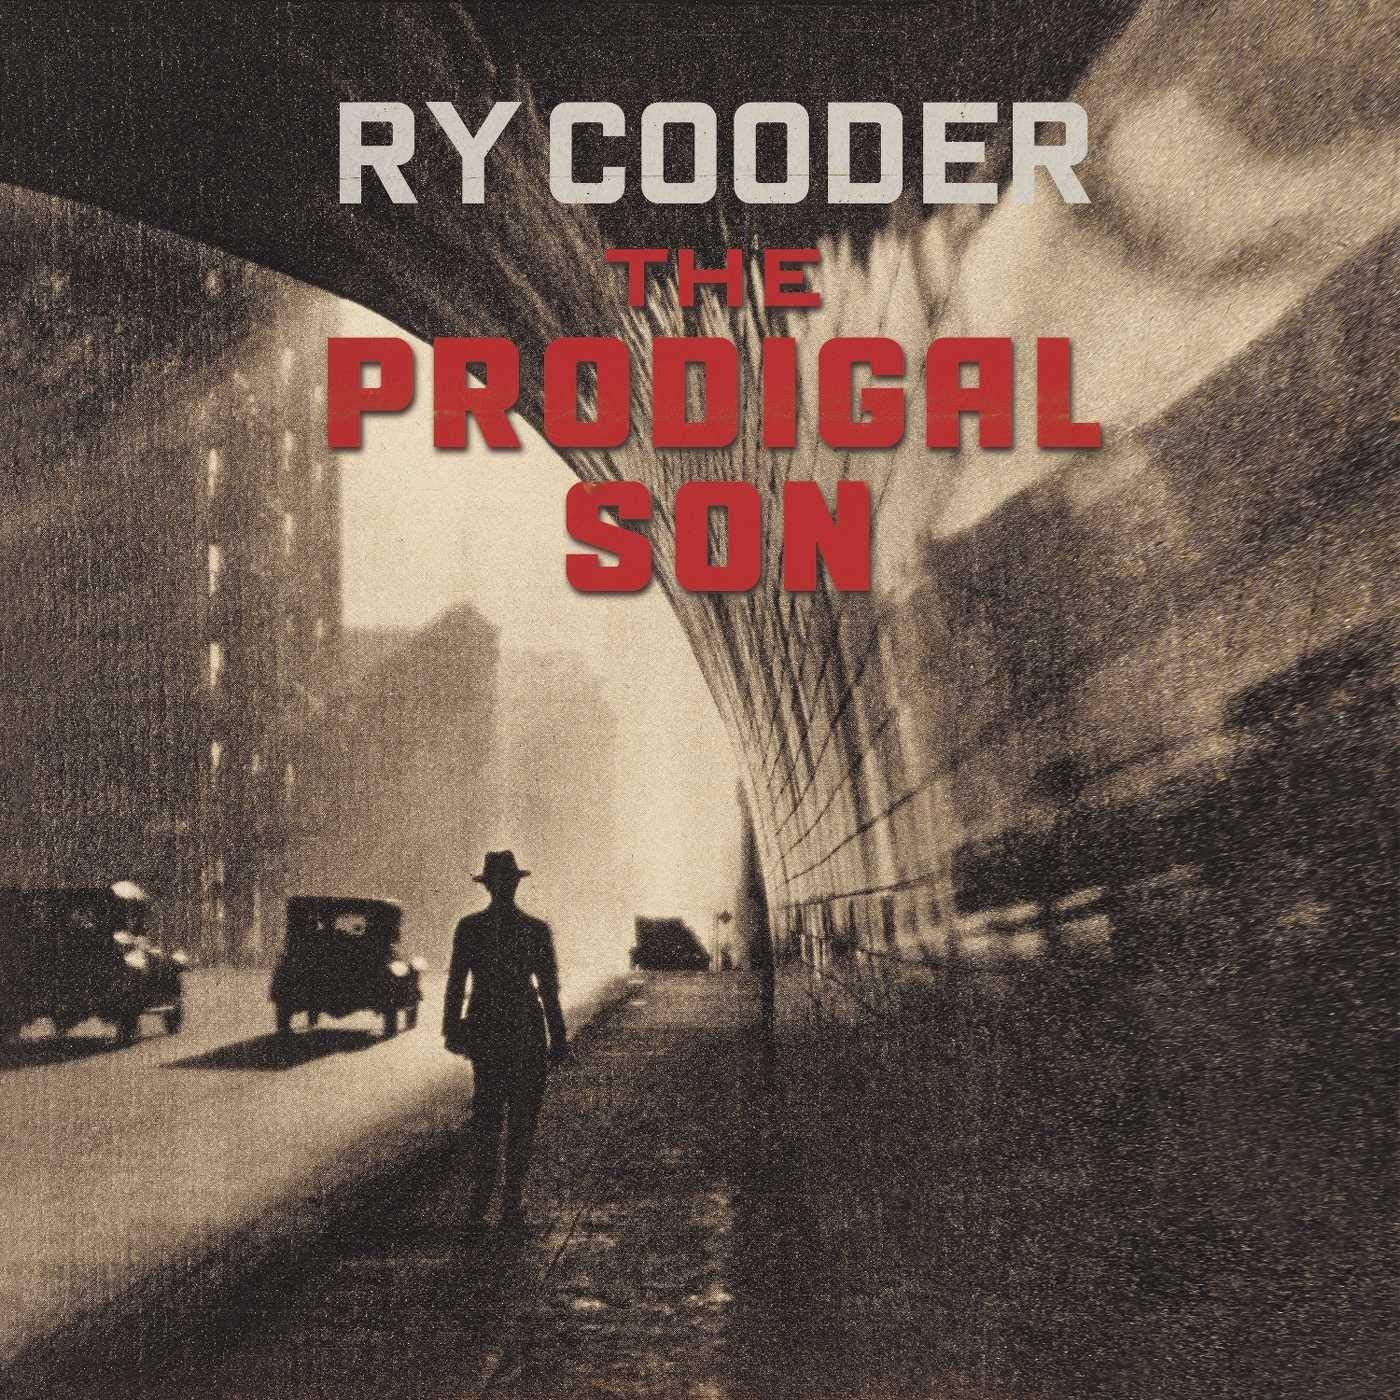 RY COODER - THE PRODIGAL SON, Vinyl